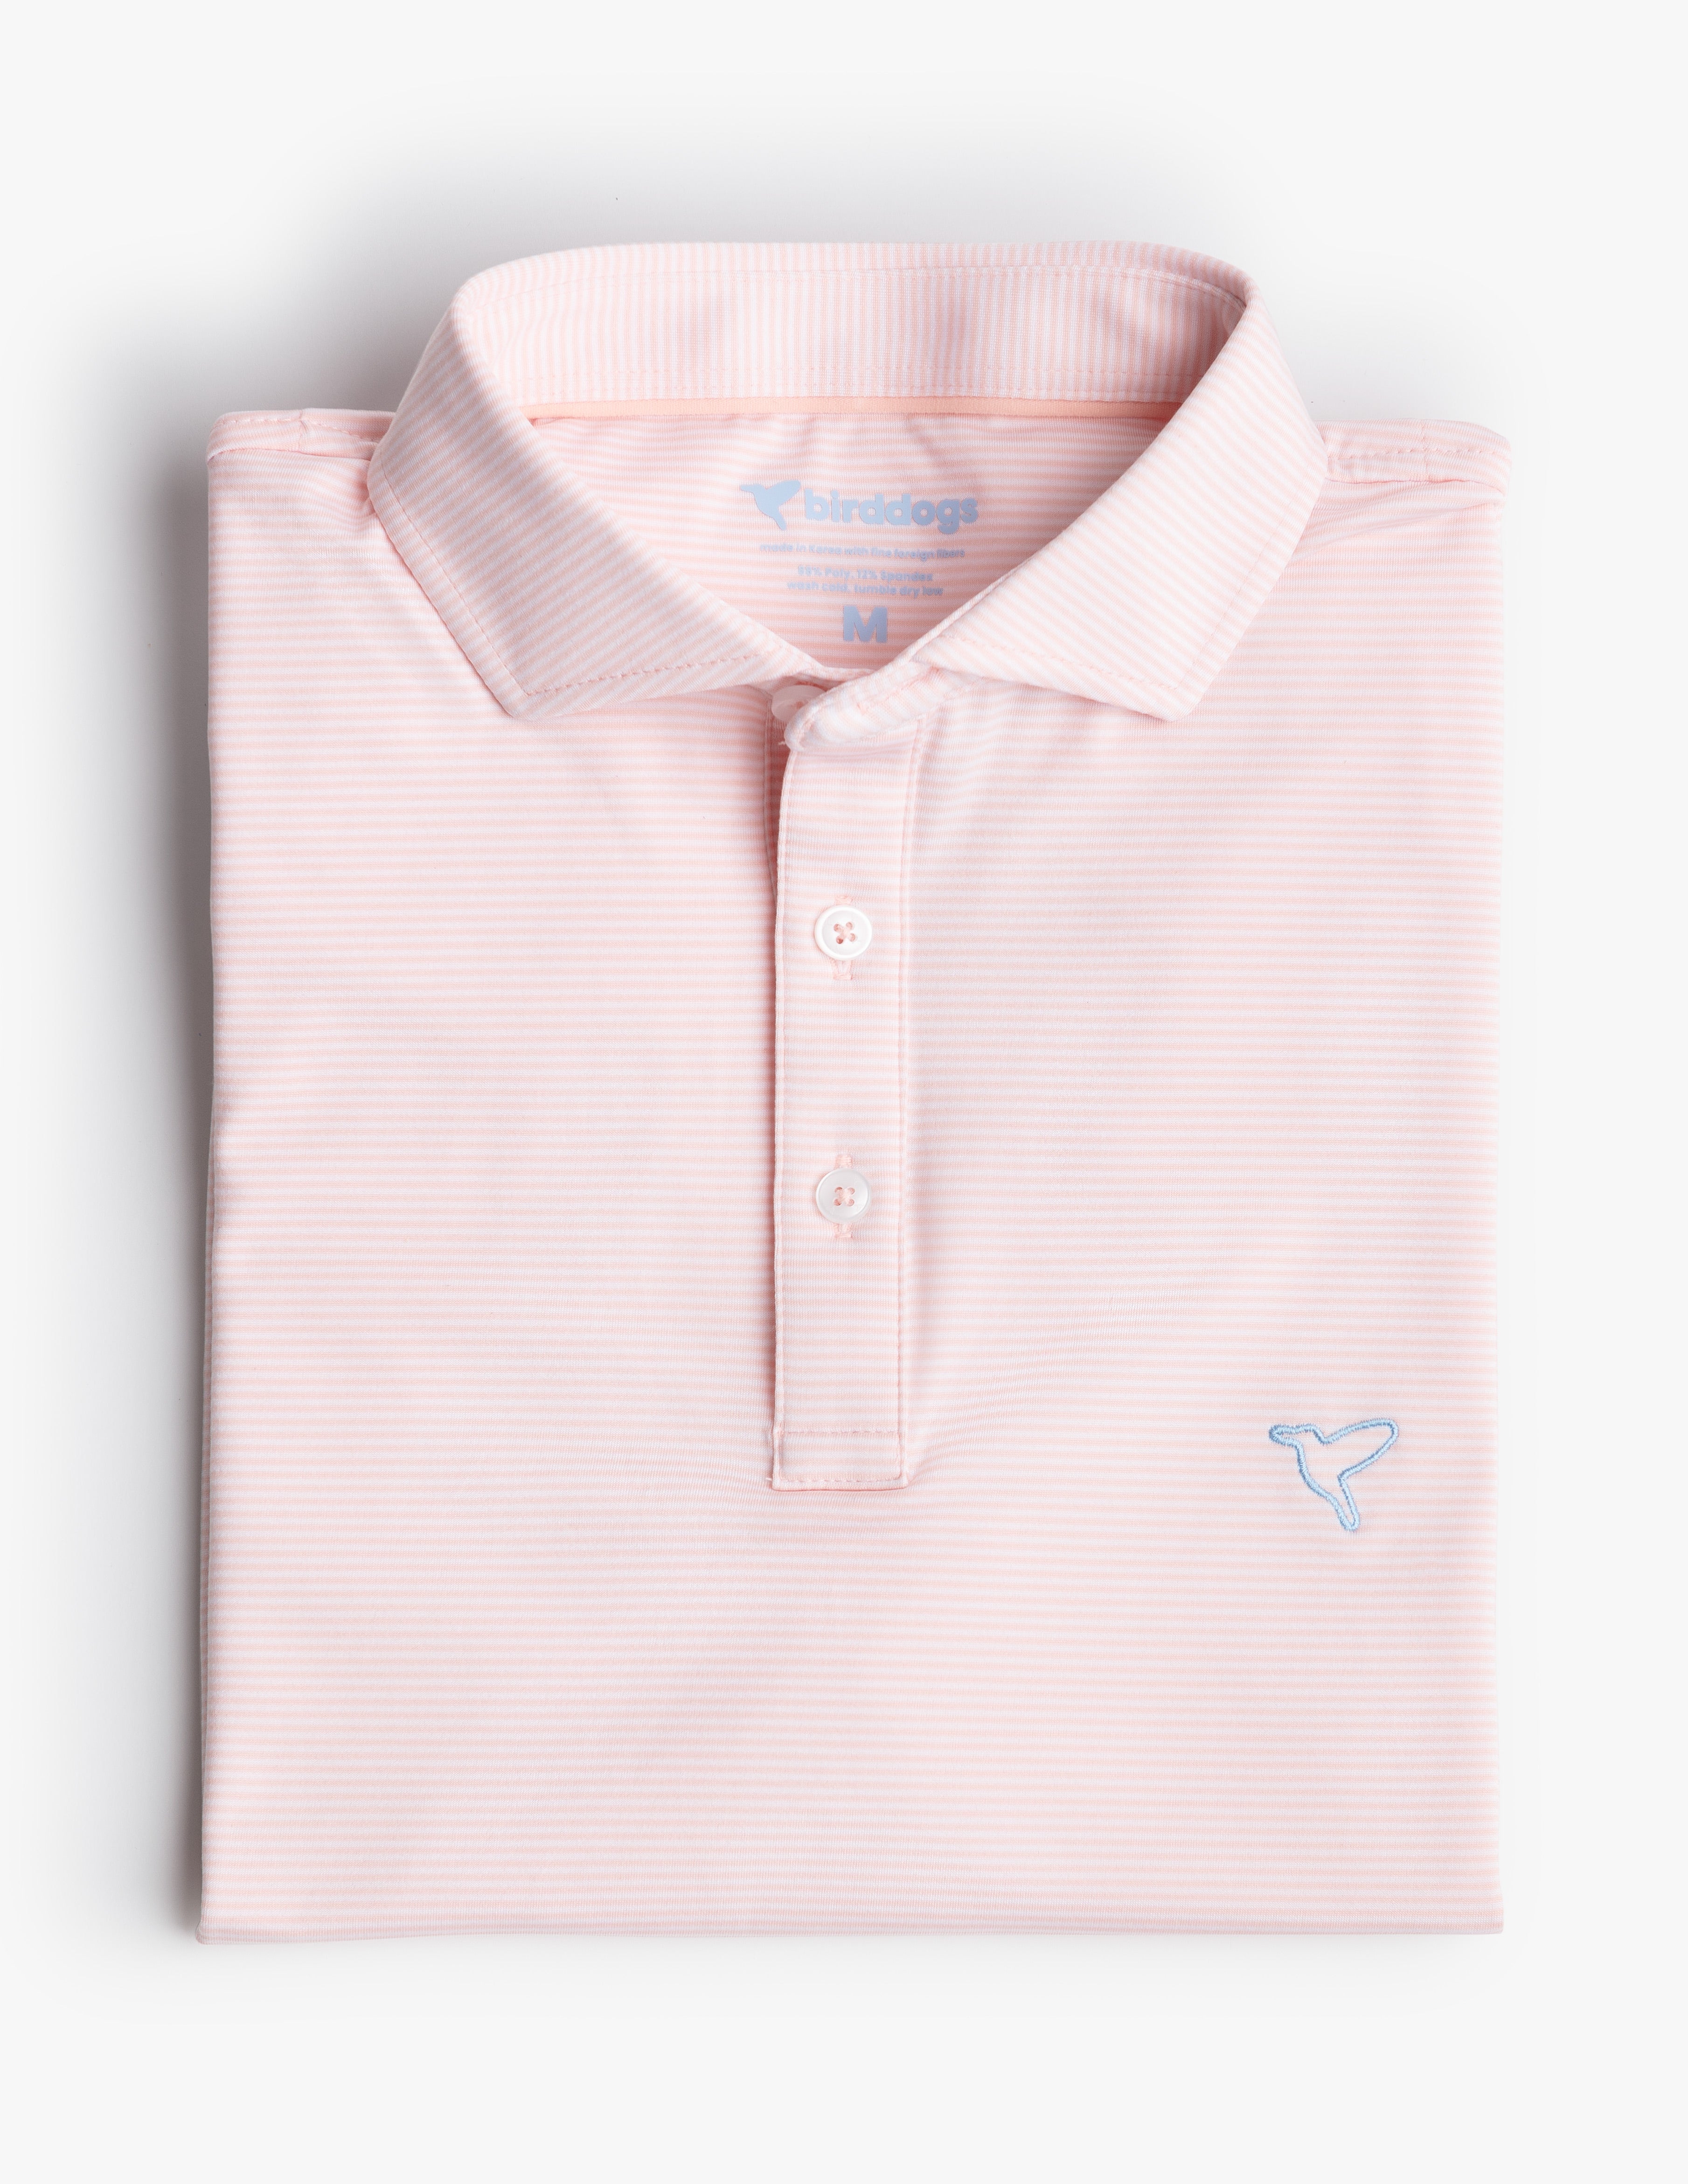 Hanes Sport Cool DRI Men's Performance T-Shirt, 2-Pack Wow Pink M